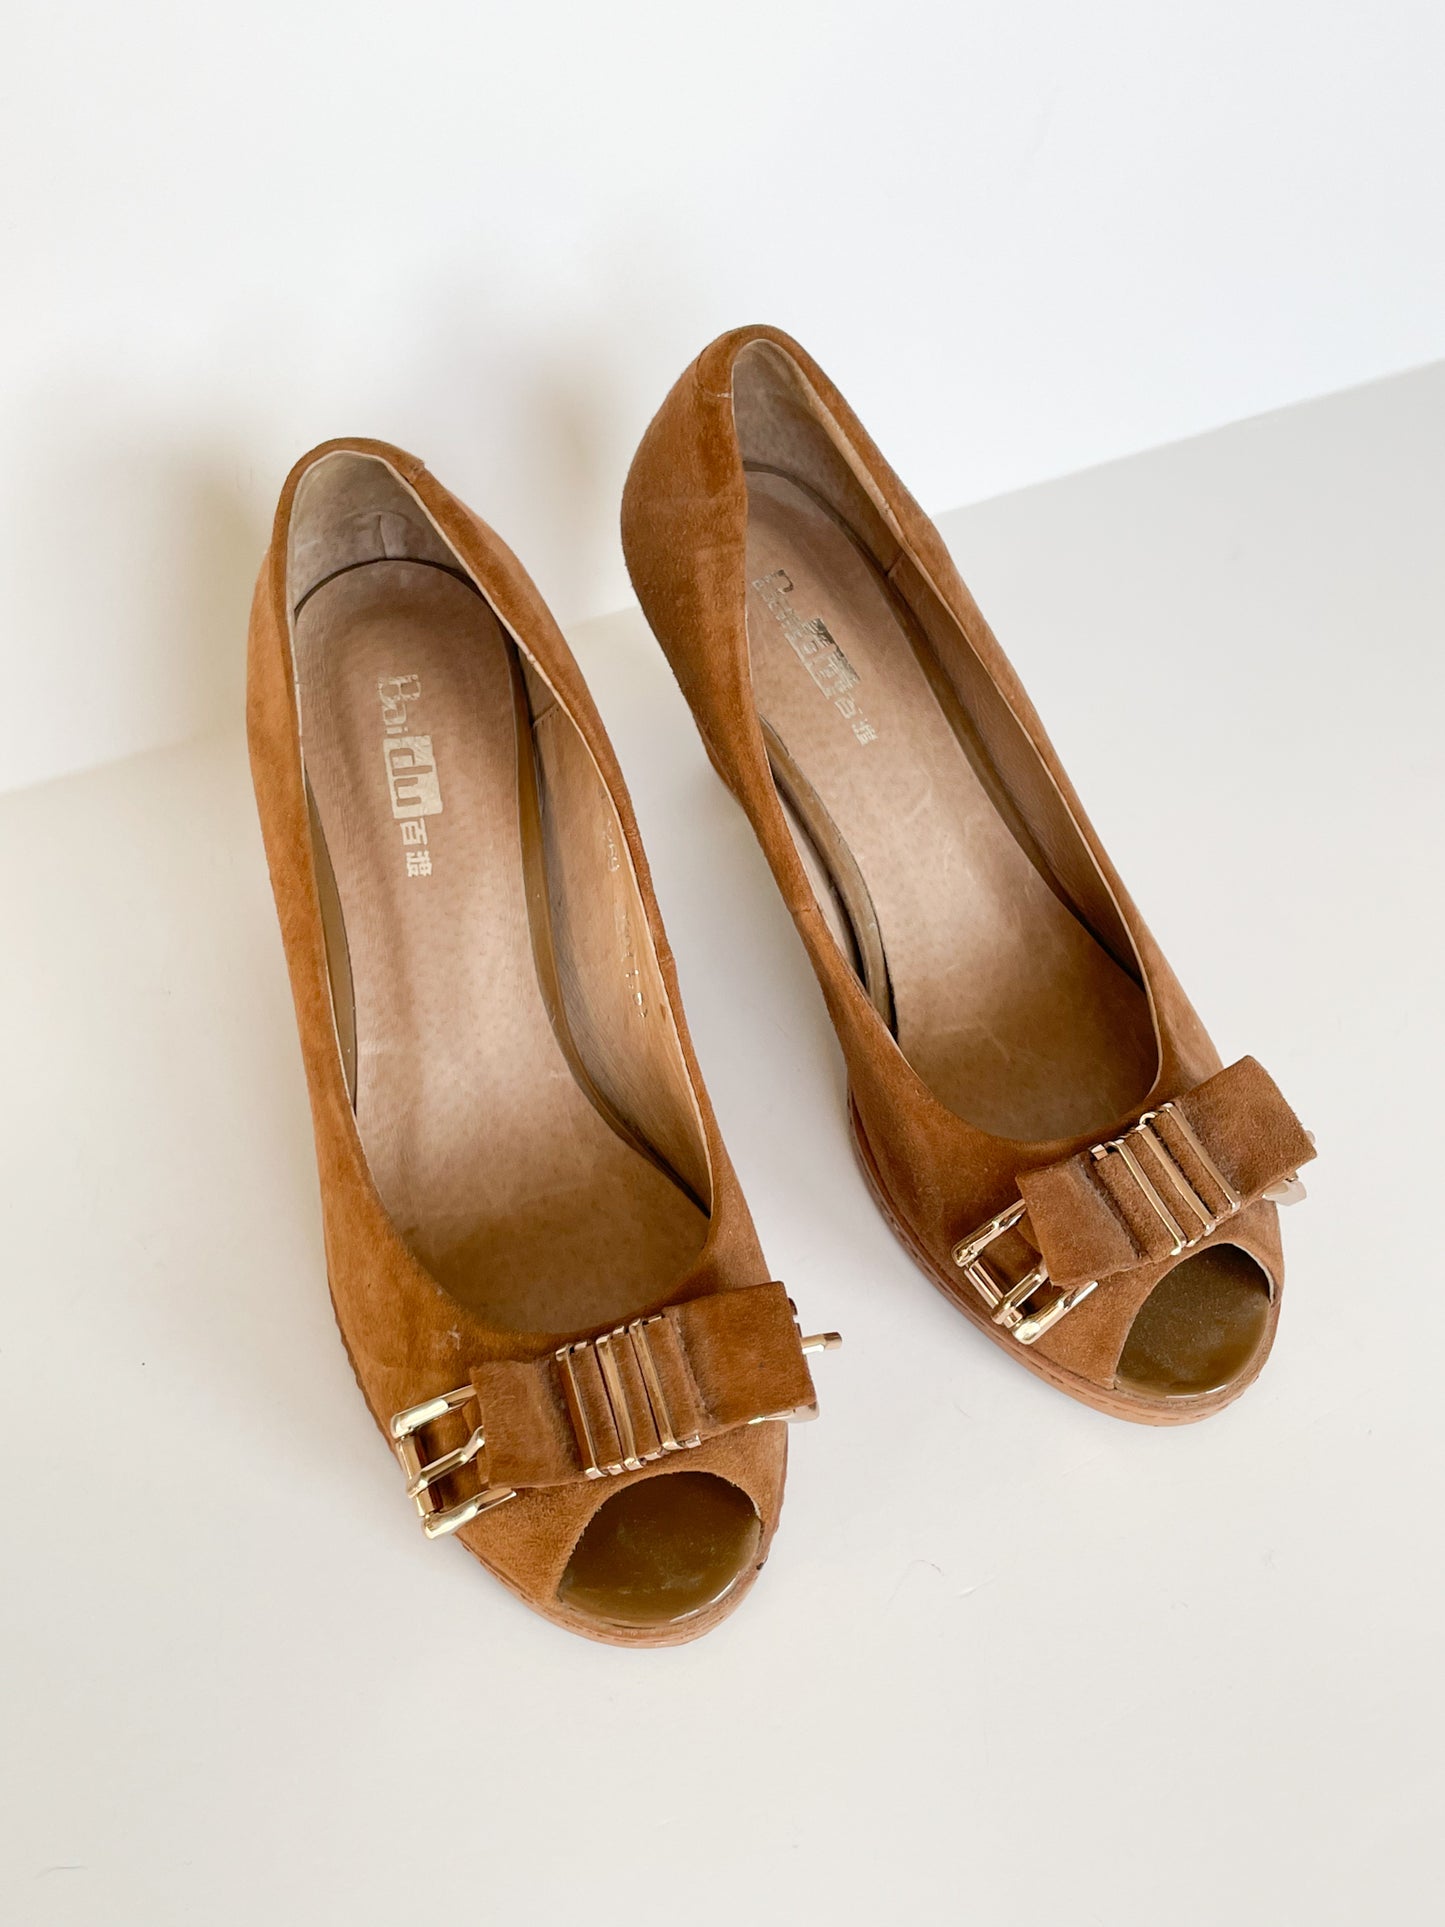 Baidu Tan Suede Leather Bow Peep Toe Heels - Size 6